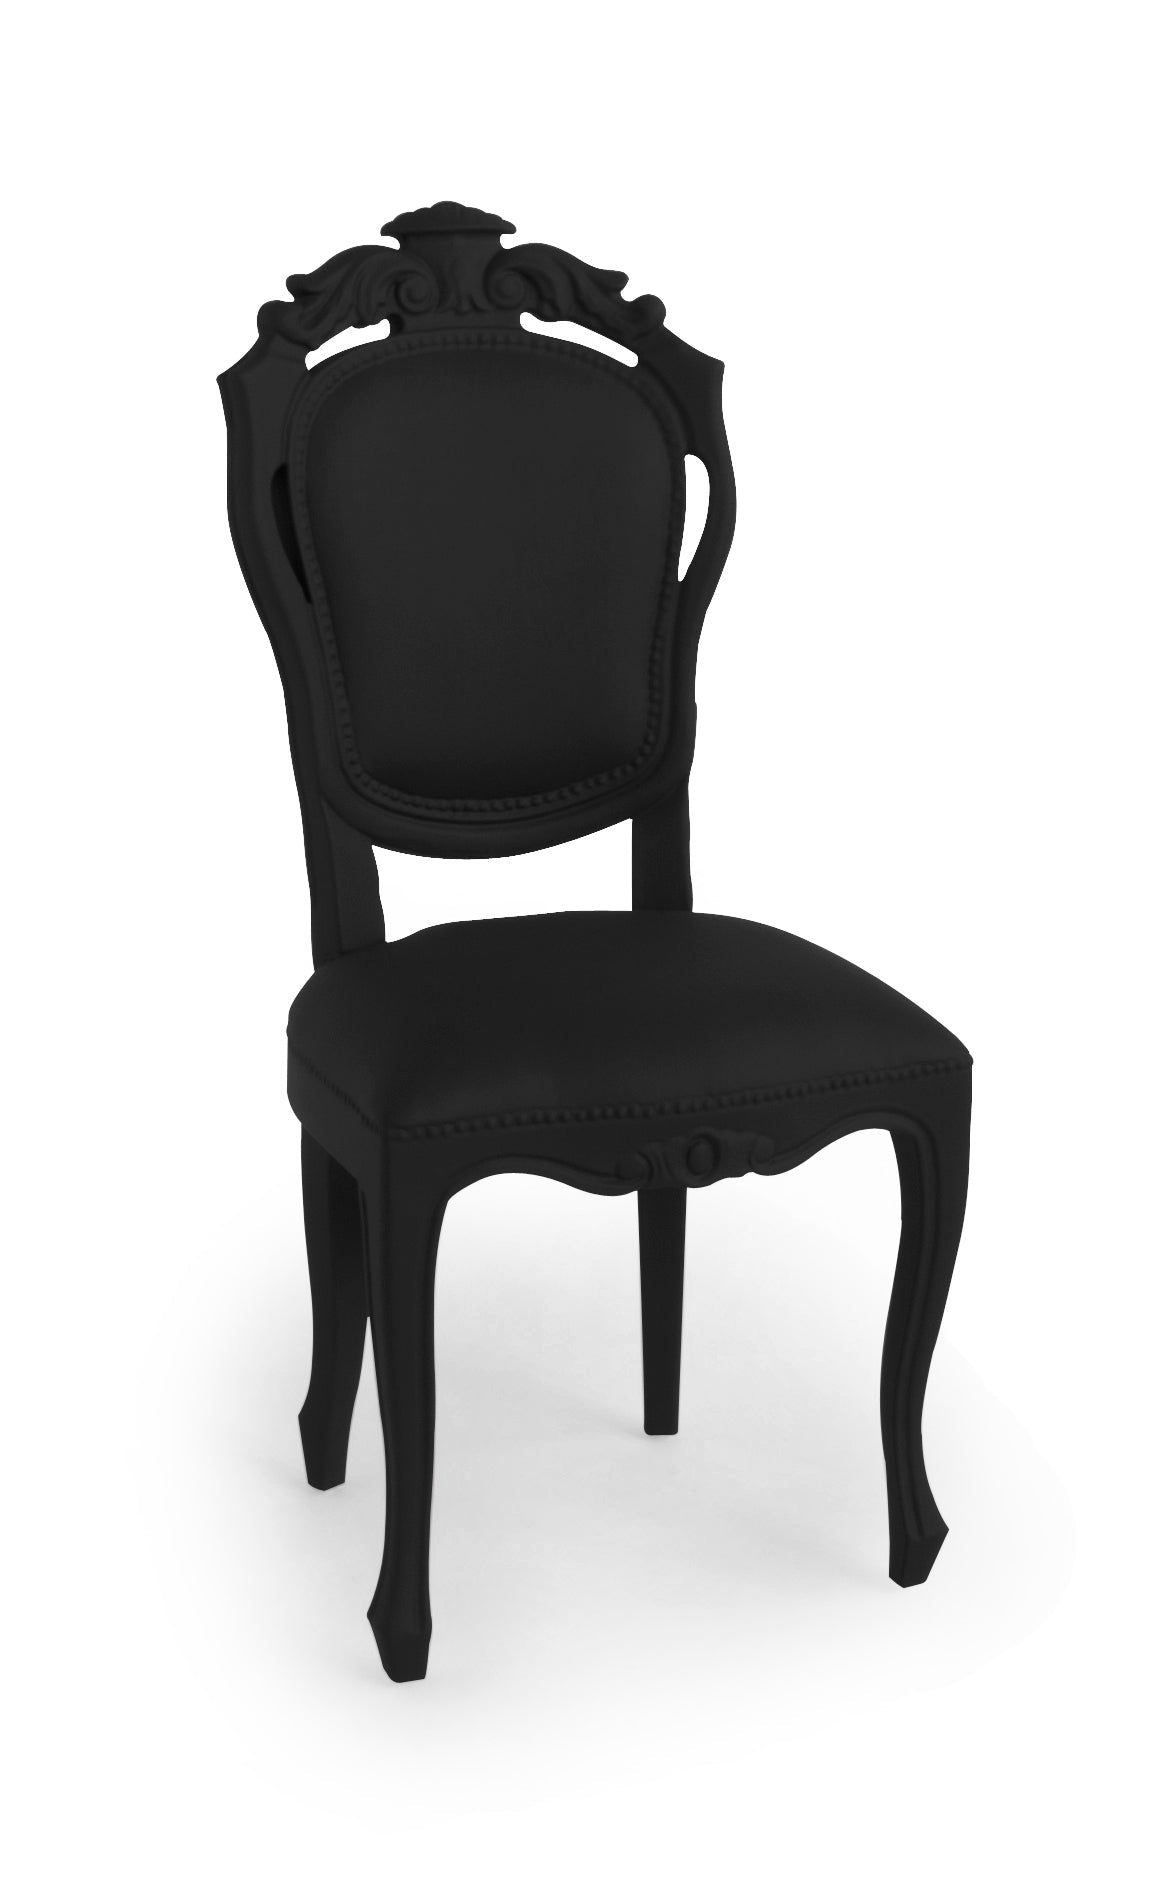 JSPR Plastic Fantastic dining chair - gimmiiJSPR